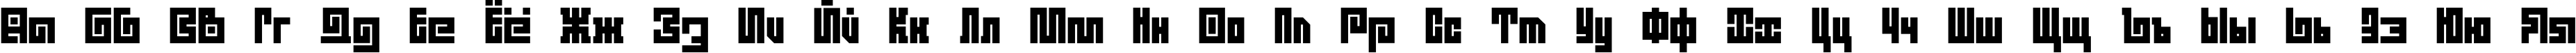 Пример написания русского алфавита шрифтом DS Quadro Black